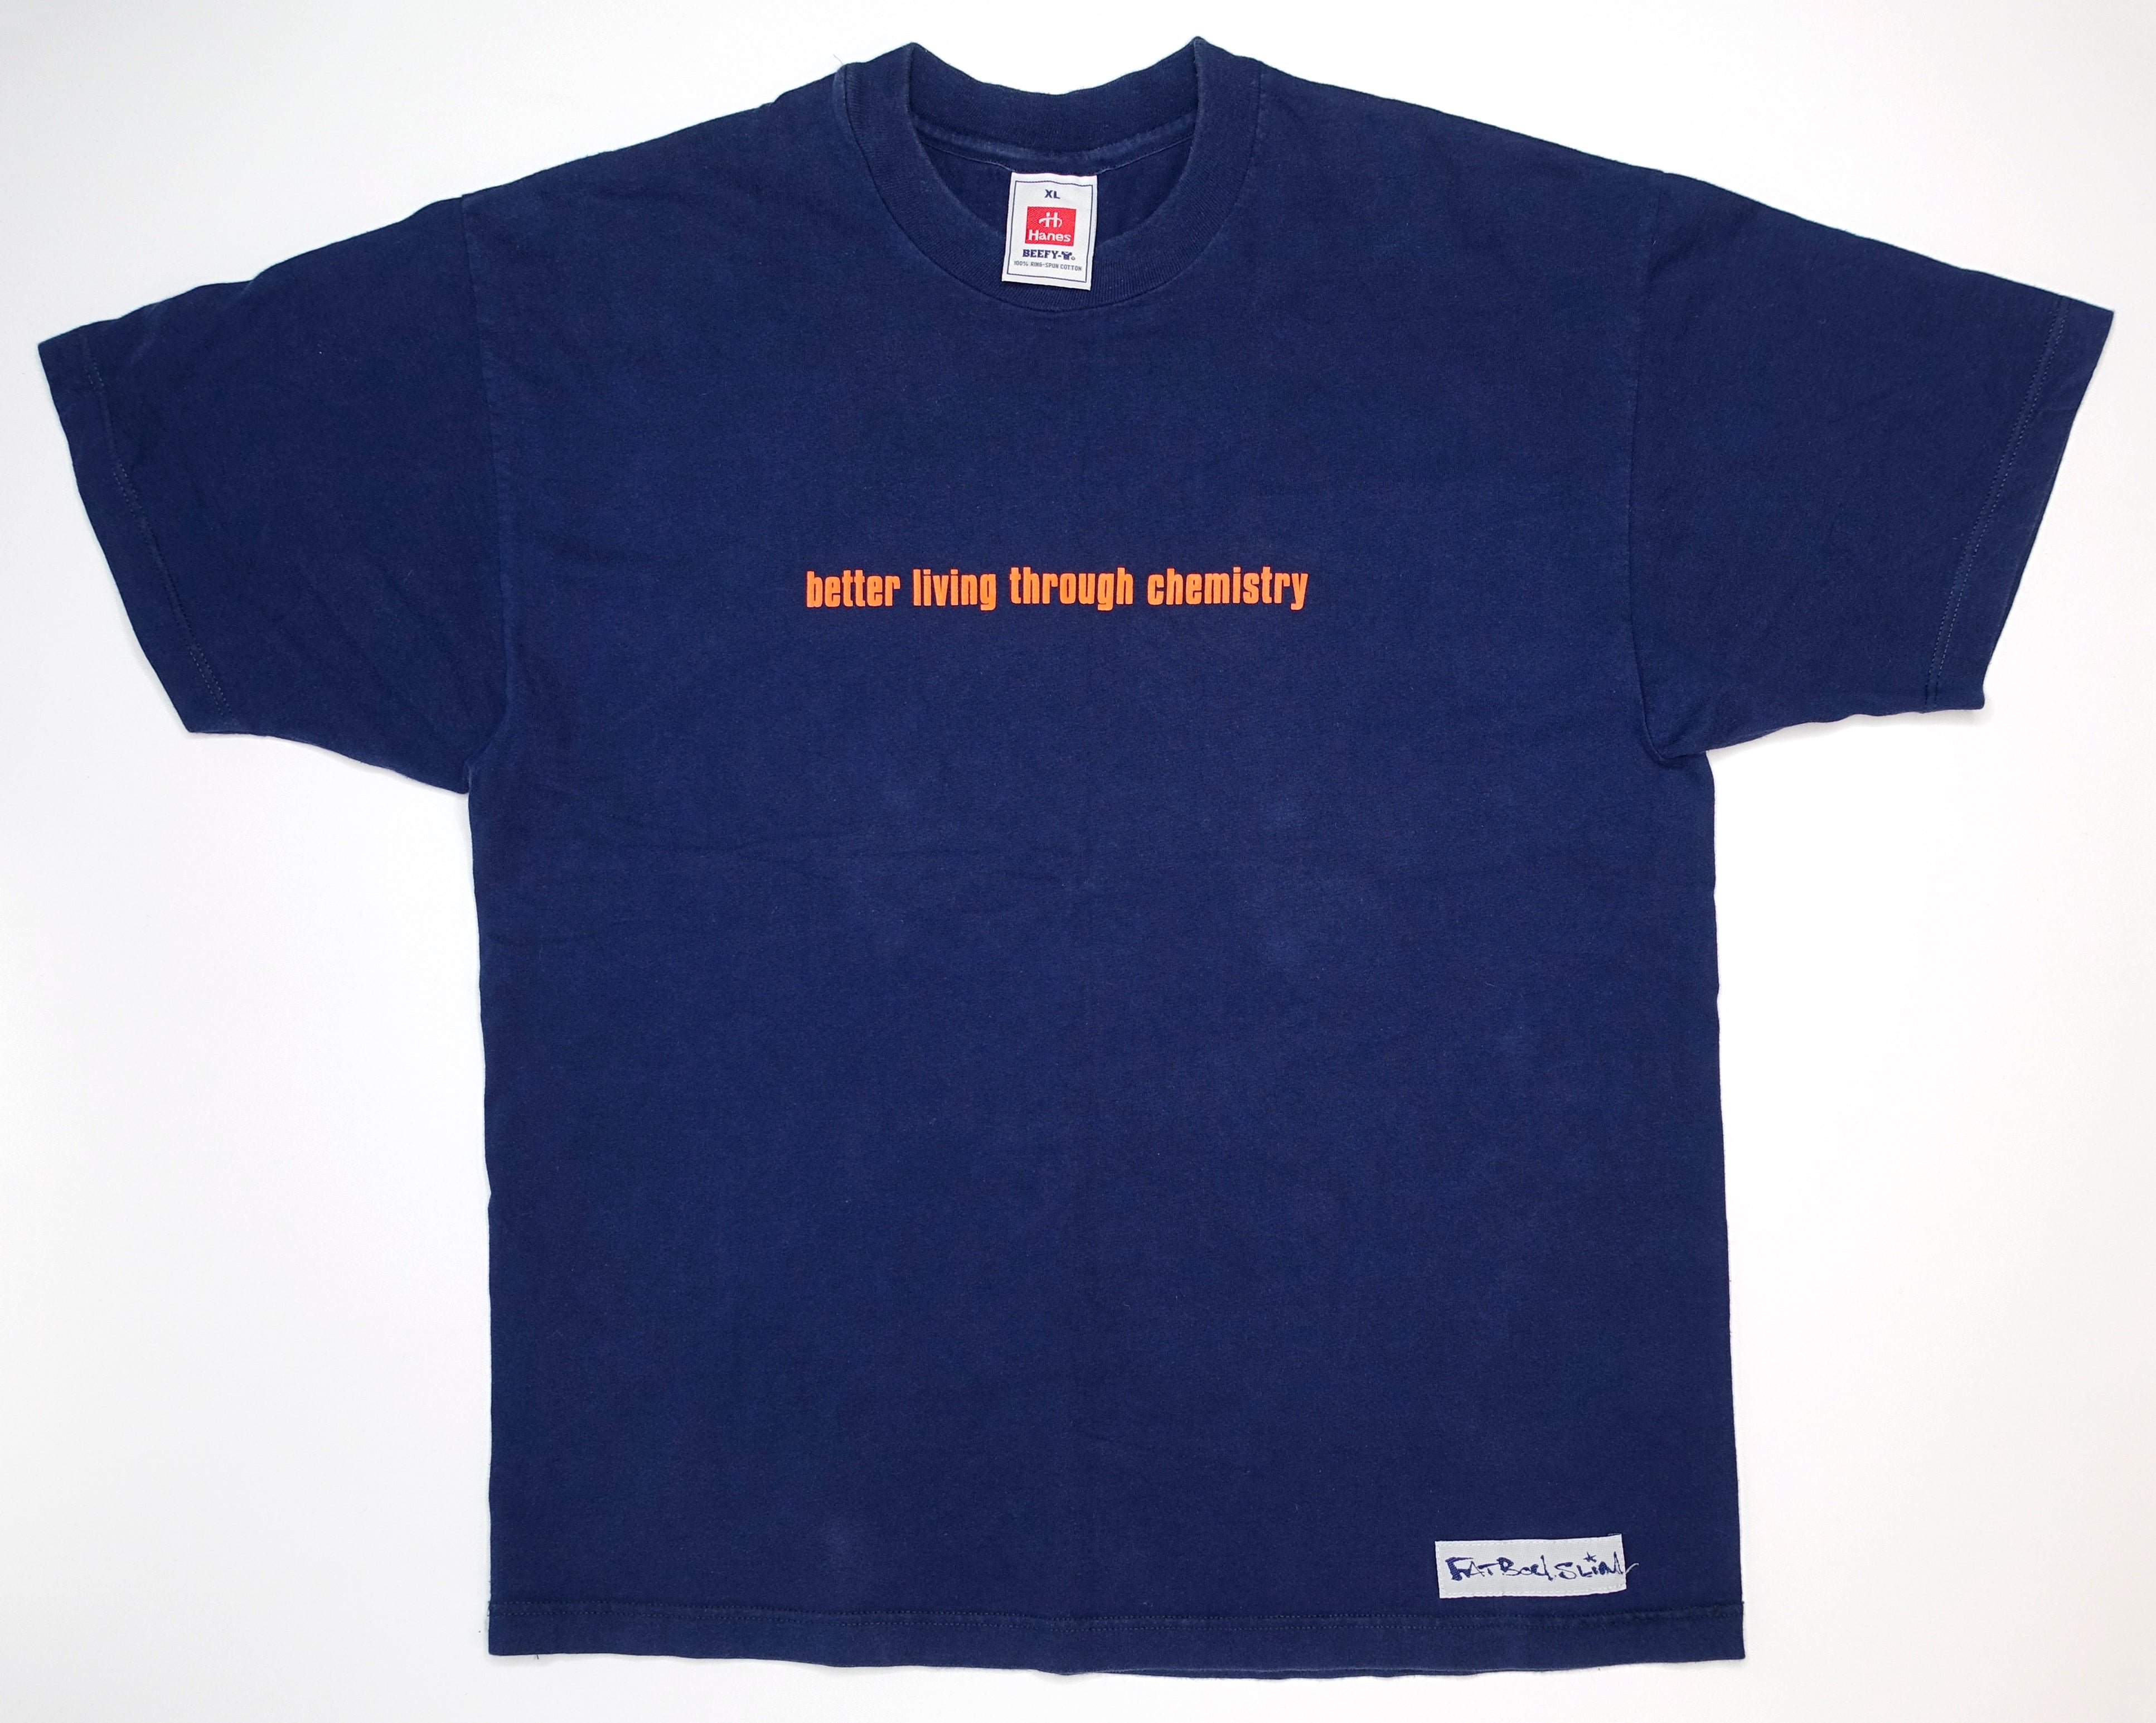 Fatboy Slim - Better Living Through Chemistry 1996 Tour Shirt Size XL